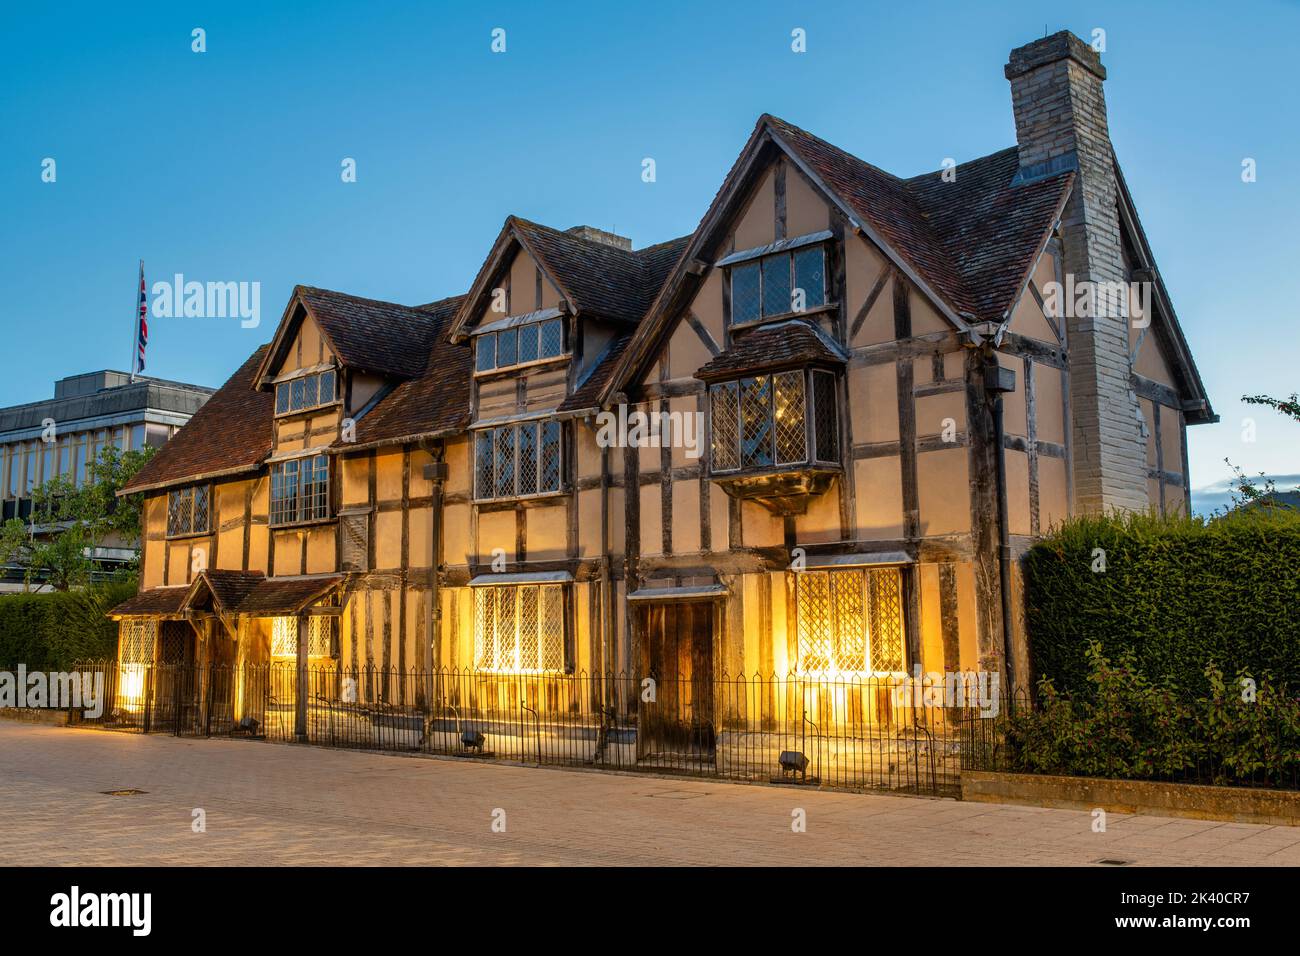 William Shakespeare birthplace at dawn. Henley street, Stratford upon Avon, Warwickshire, England Stock Photo